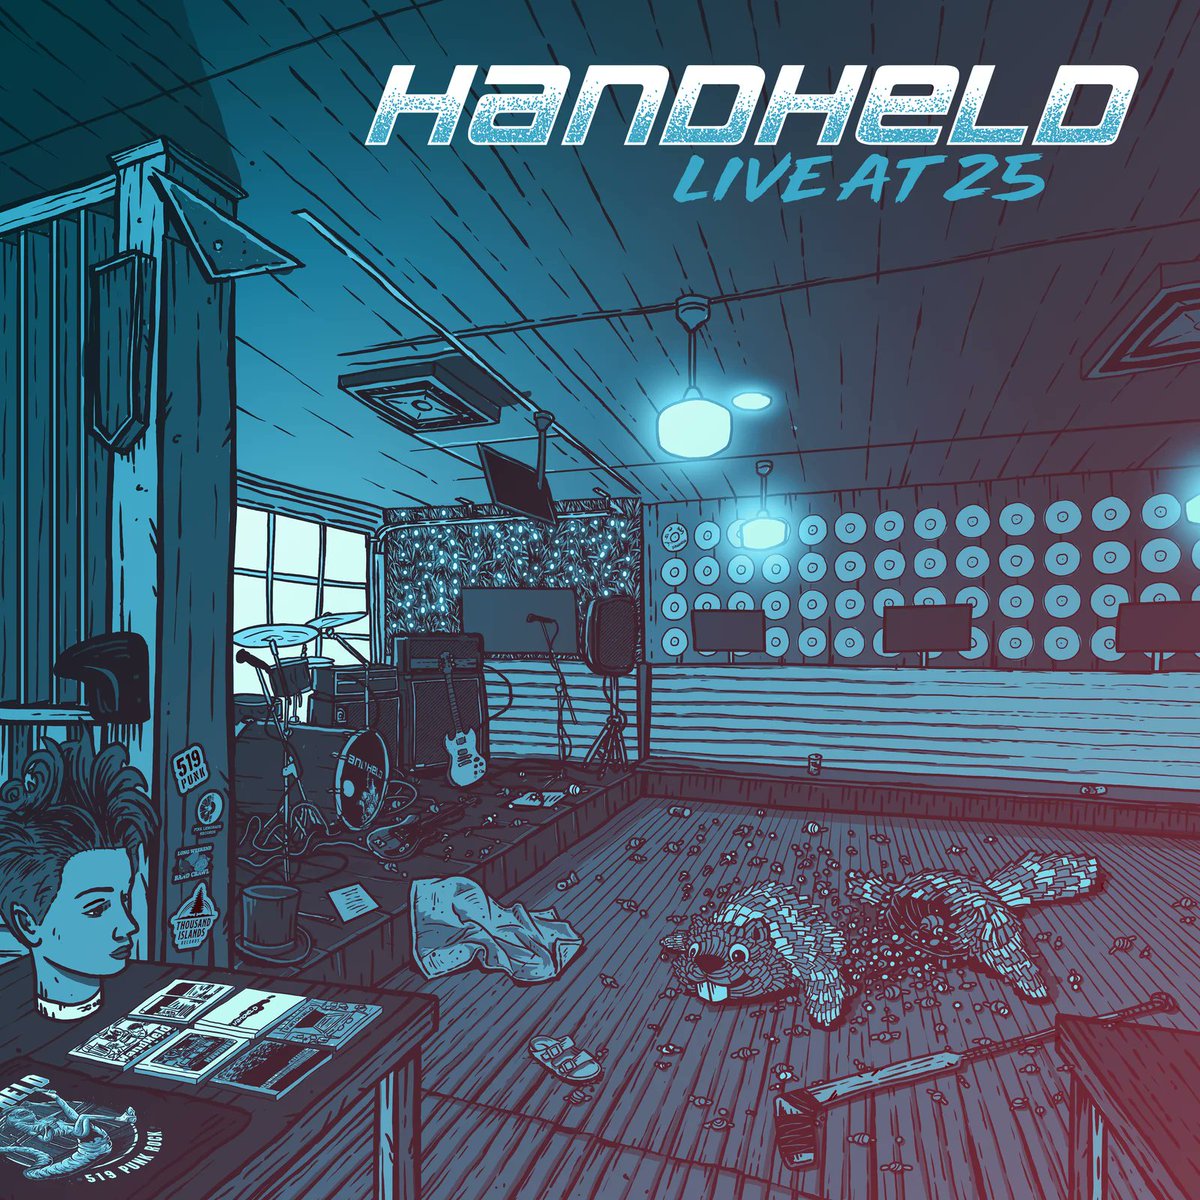 Handheld Celebrate Their 25th Anniversary With 'Live At 25' Album thepunksite.com/news/handheld-…